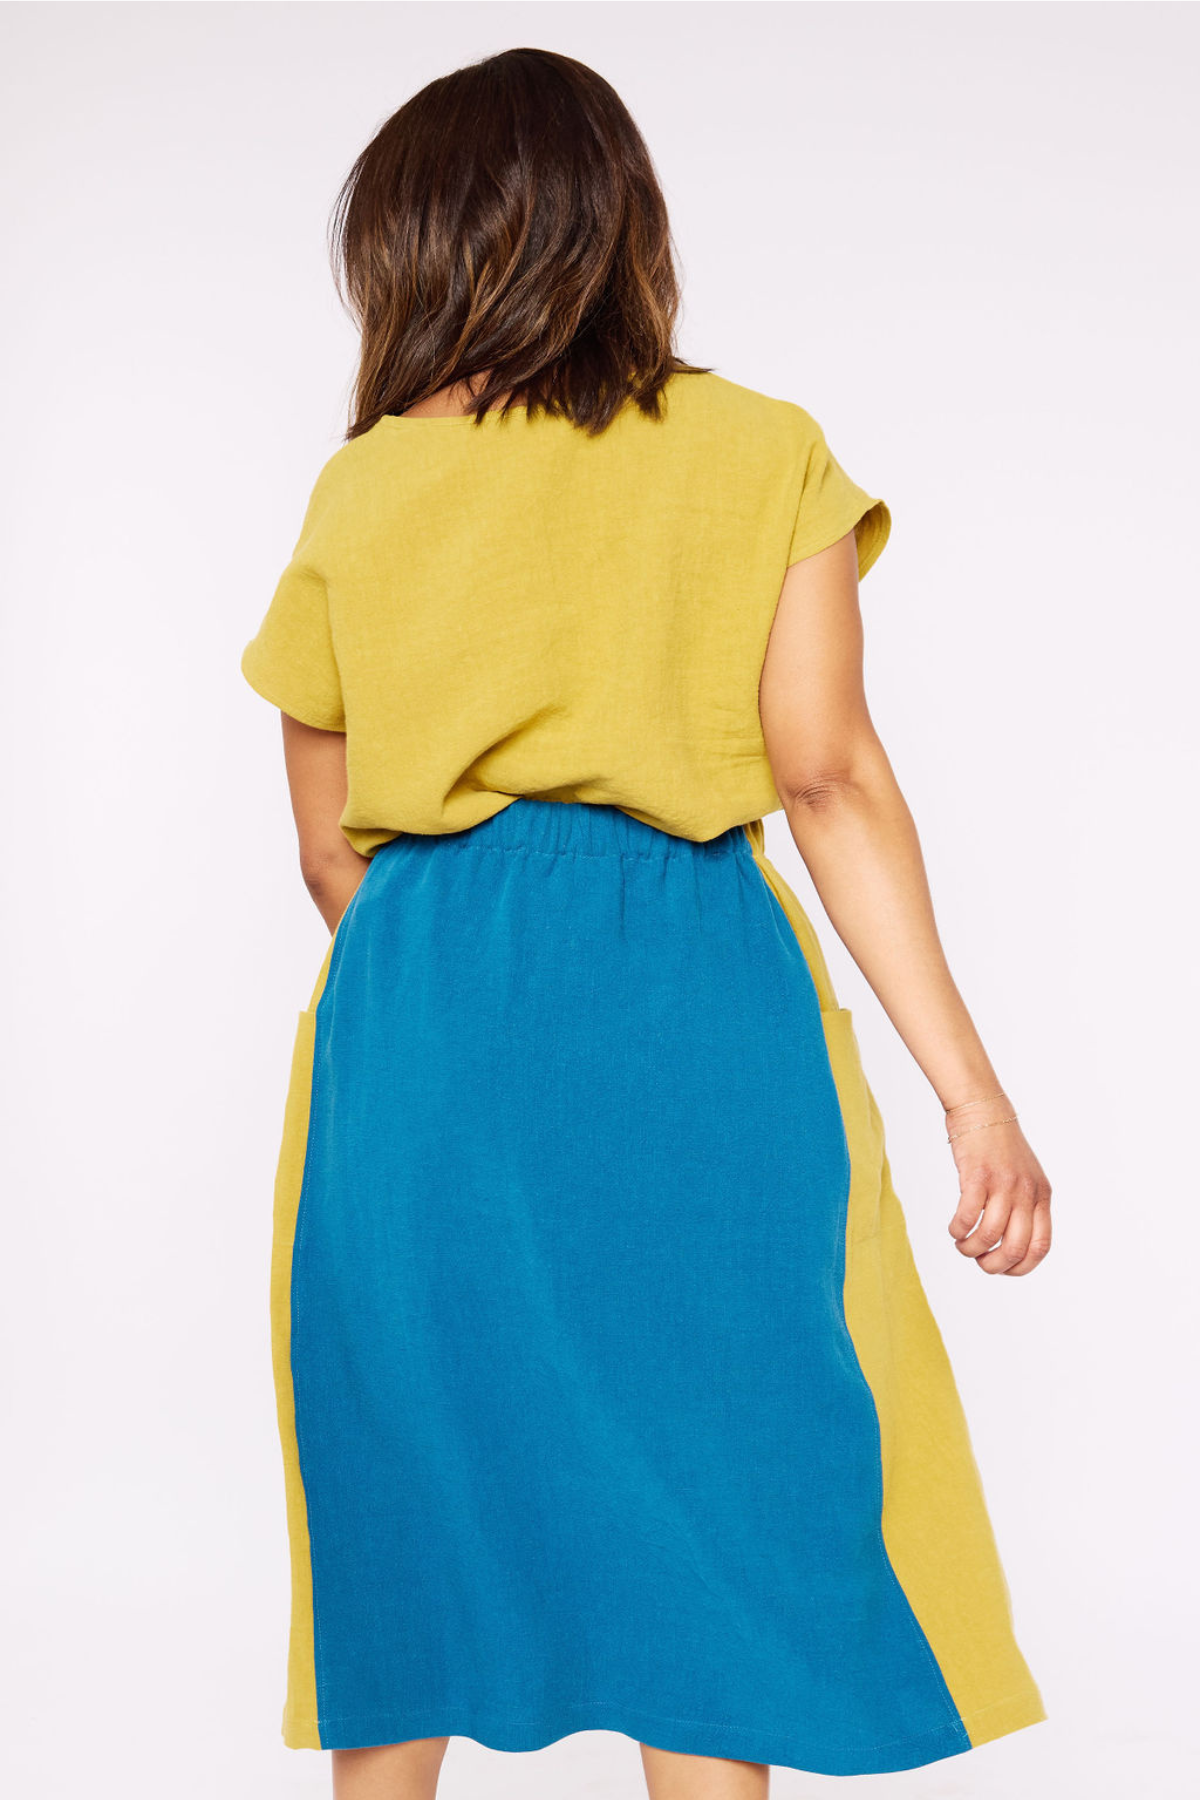 Grown-up Skirt - Colorblock Pockets!